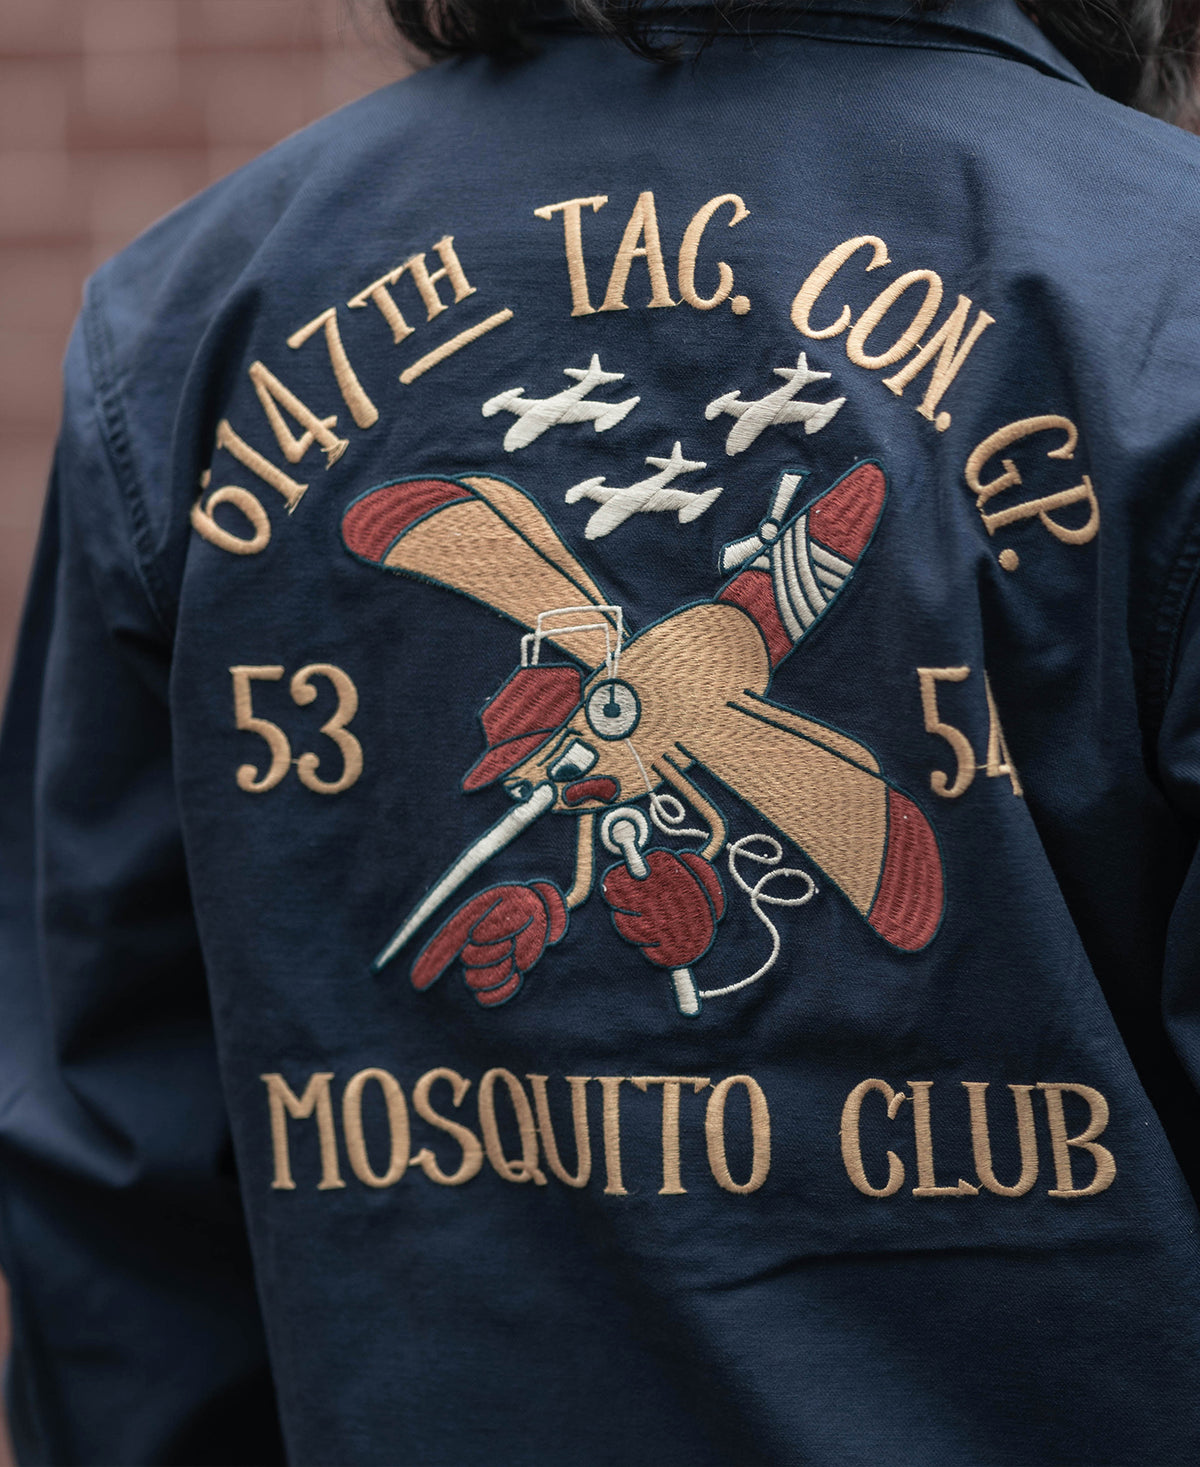 Korean War 6147th TAG. CON. GP. Mosquito Club Tour Jacket